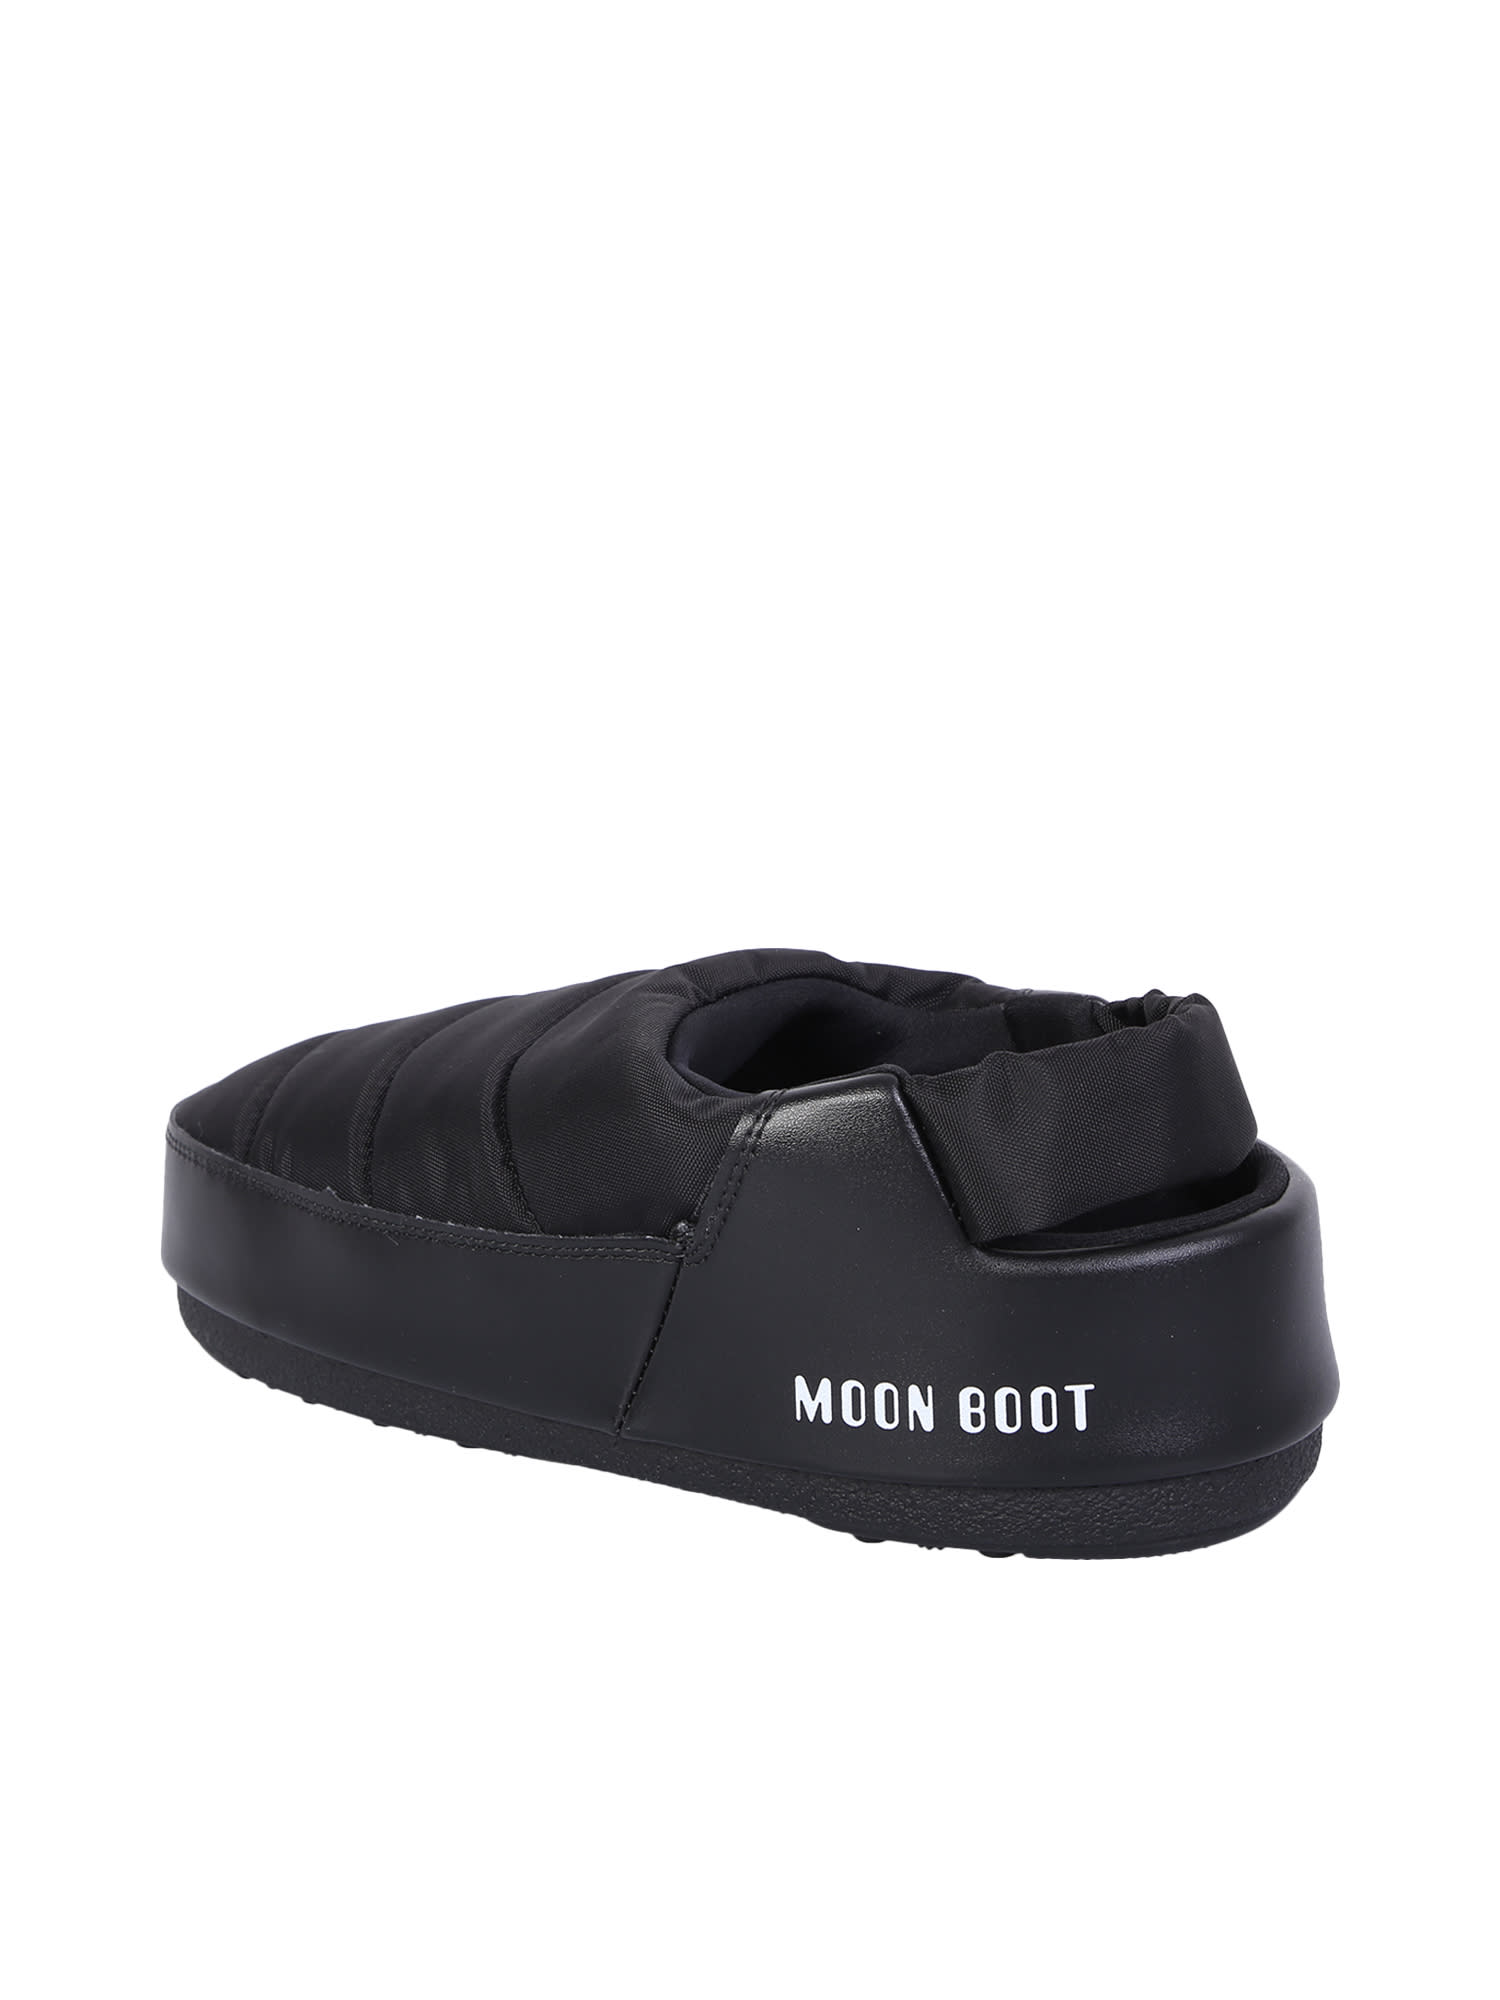 Shop Moon Boot Black Evolution Sandals